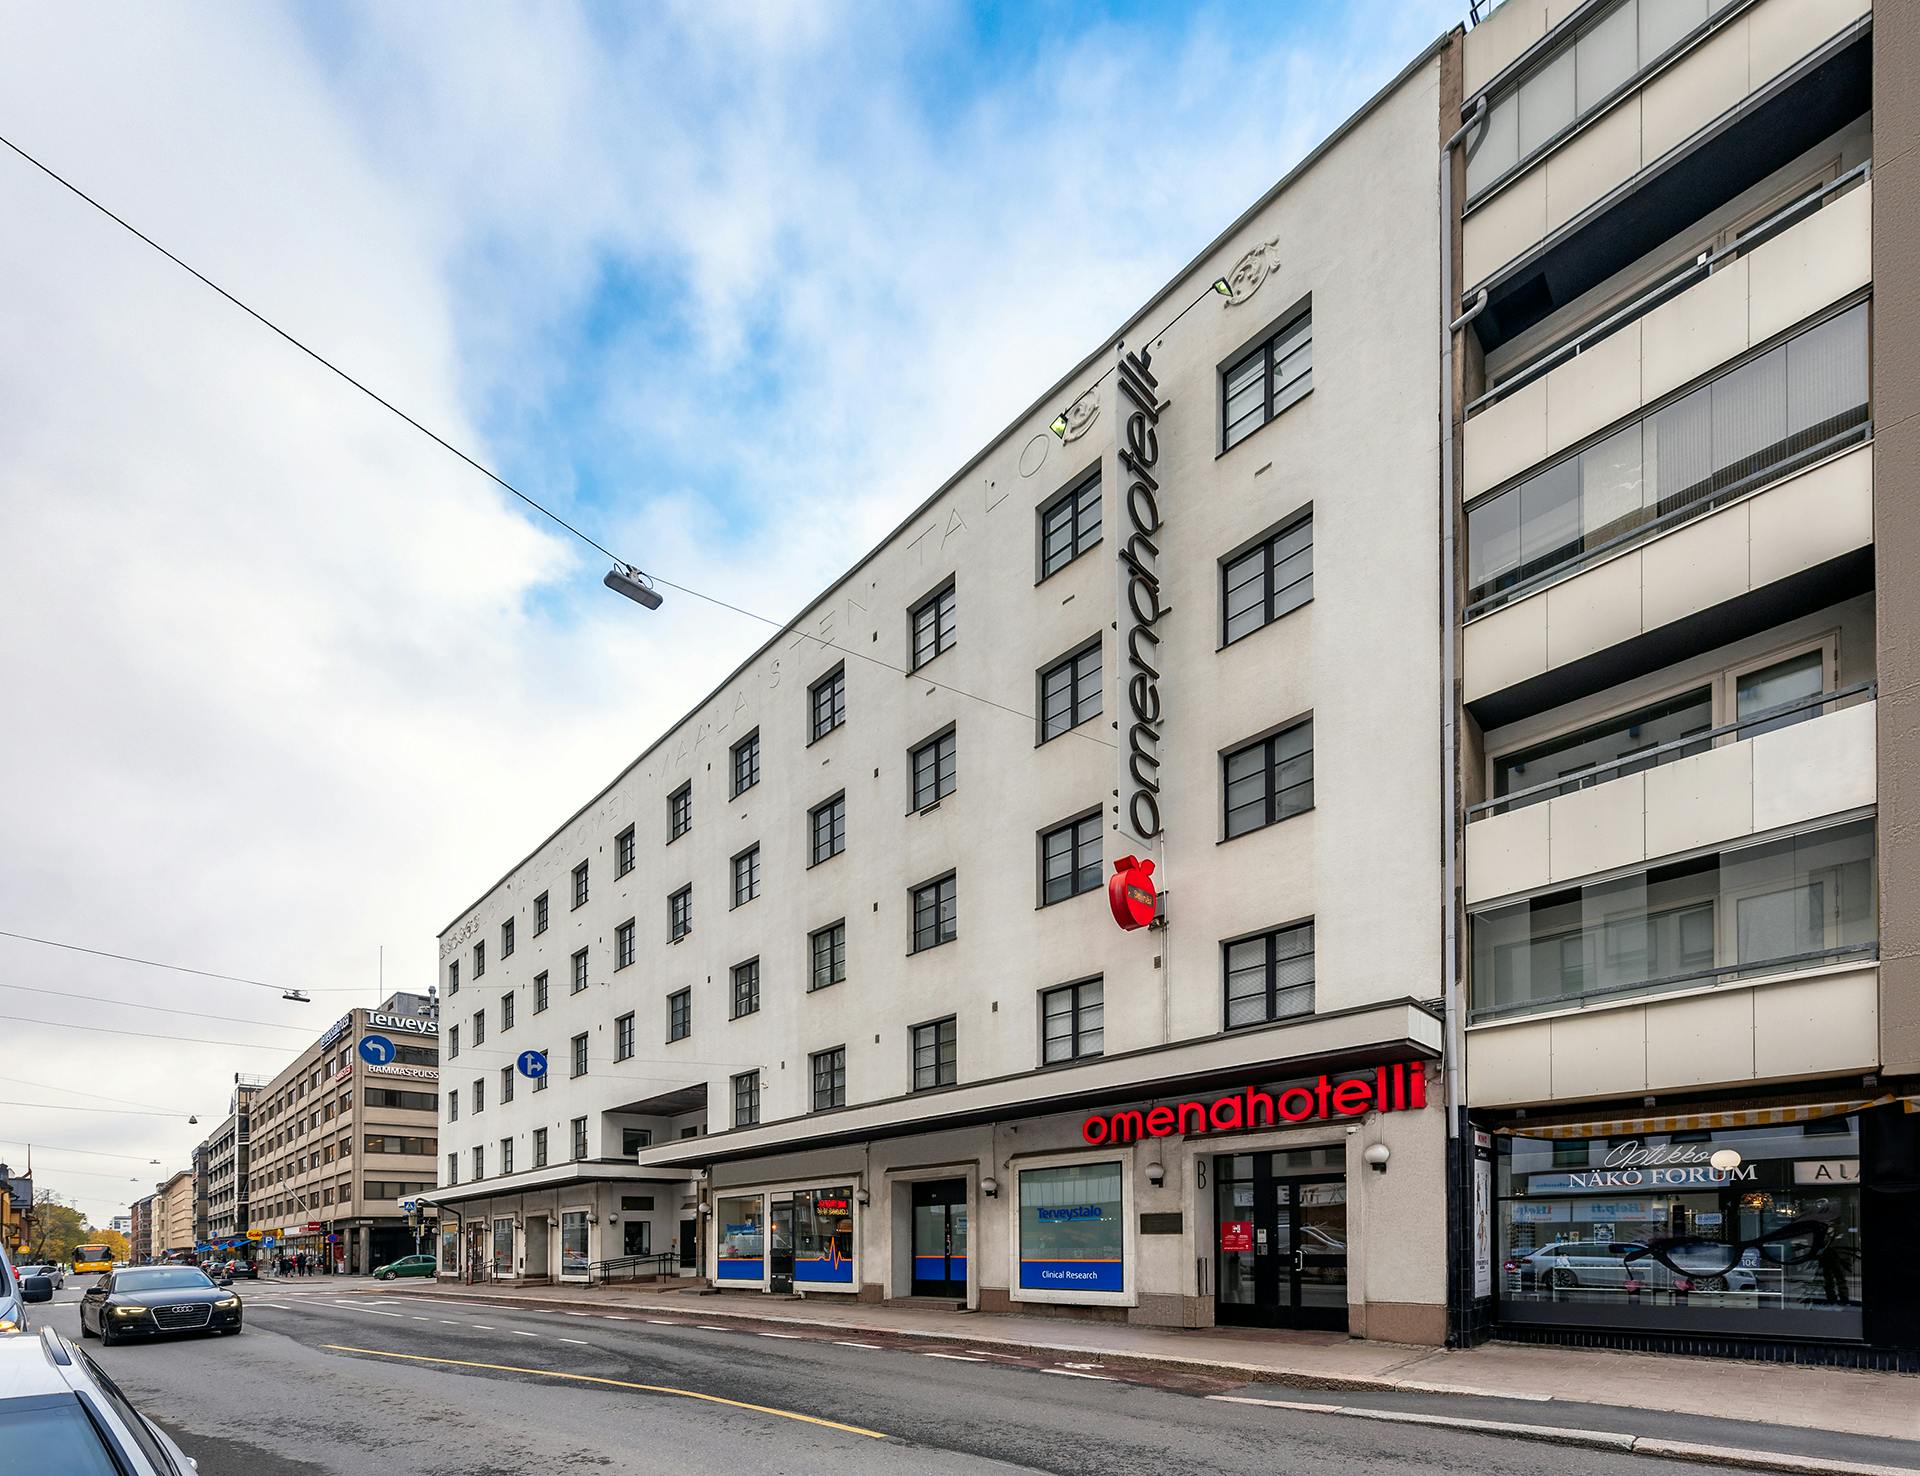 Omena-hotelli Turku Humalistonkatu